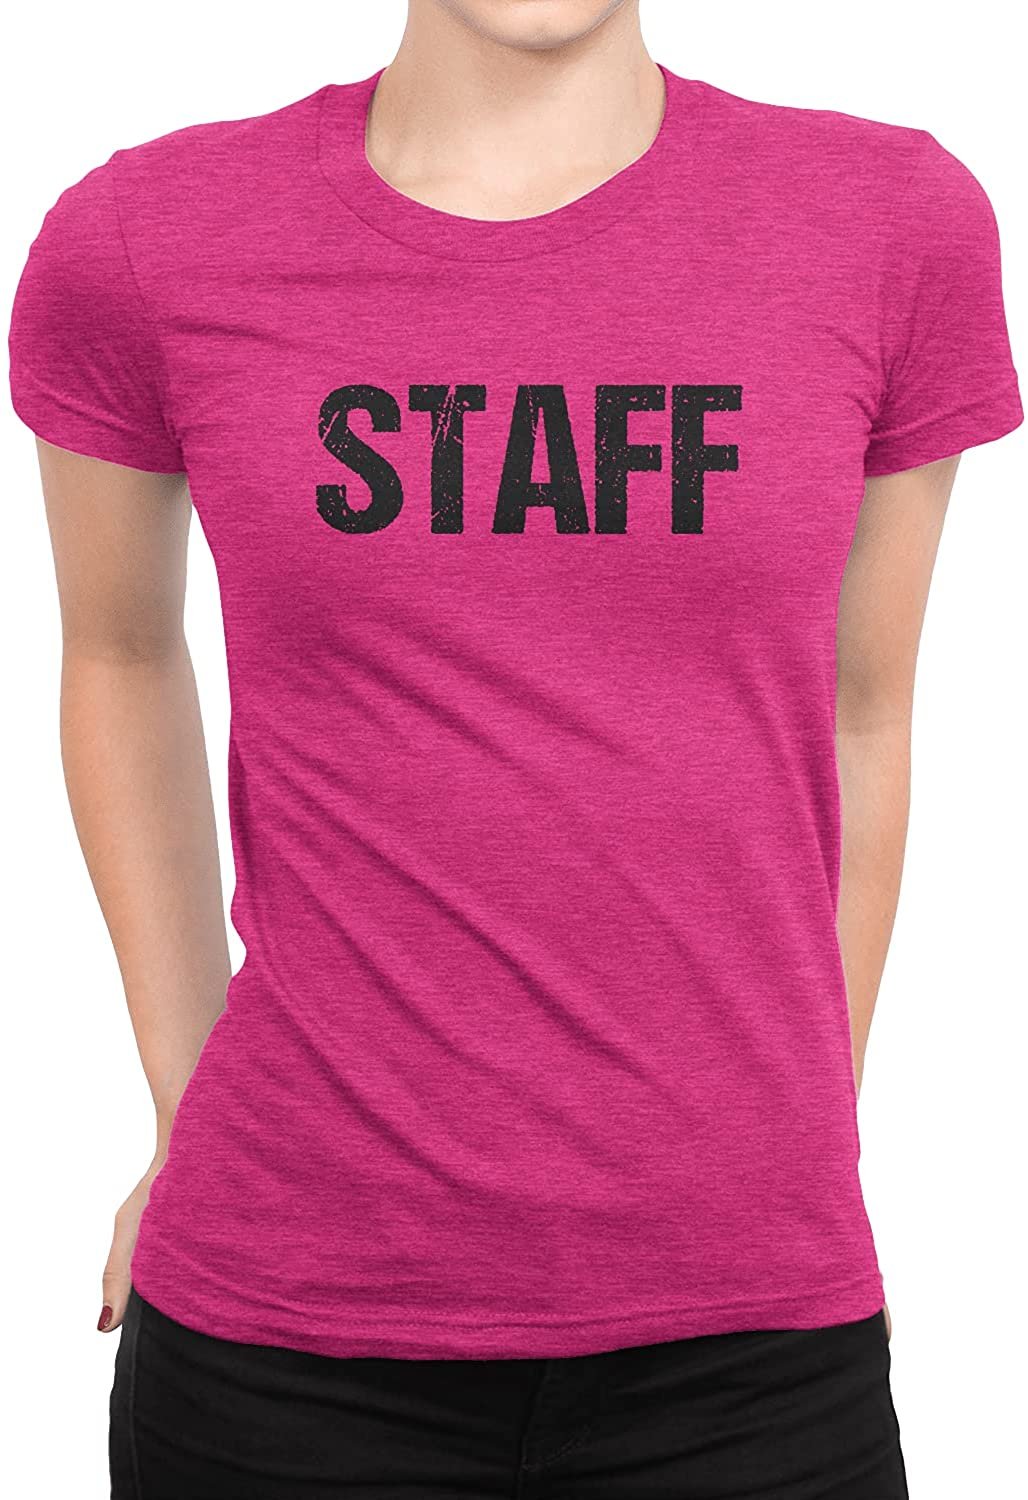 Staff Ladies Short Sleeve T-Shirt (Distressed Design, Heather Pink)